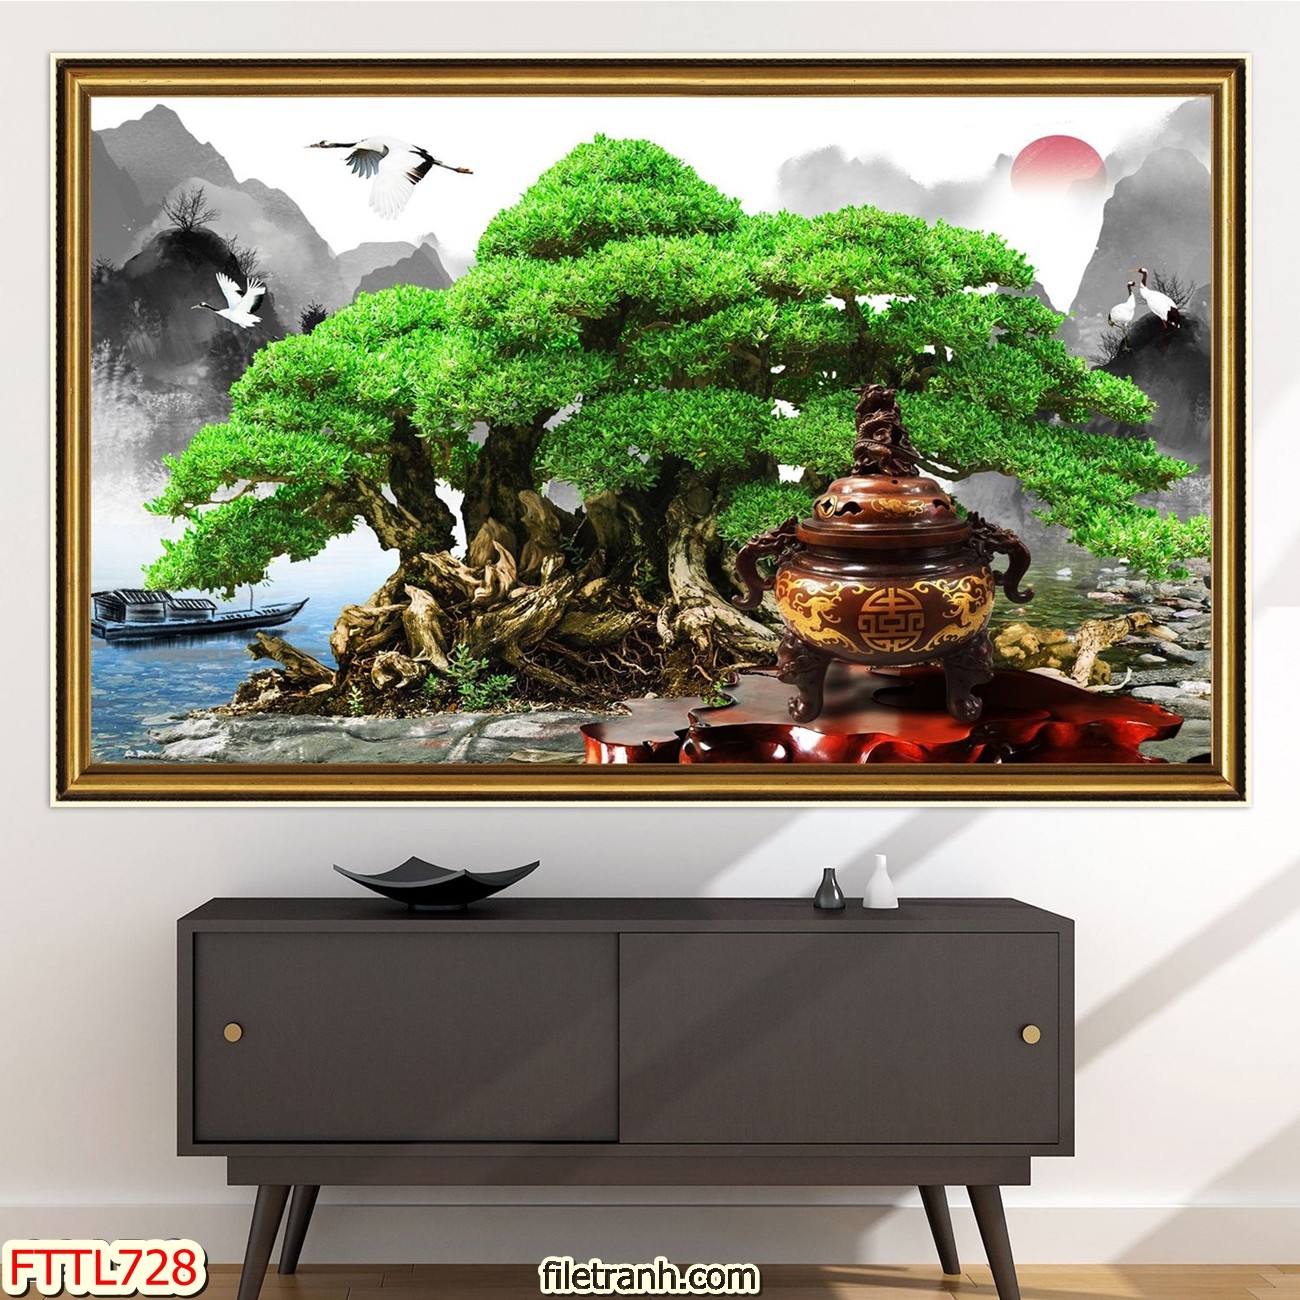 https://filetranh.com/file-tranh-chau-mai-bonsai/file-tranh-chau-mai-bonsai-fttl728.html